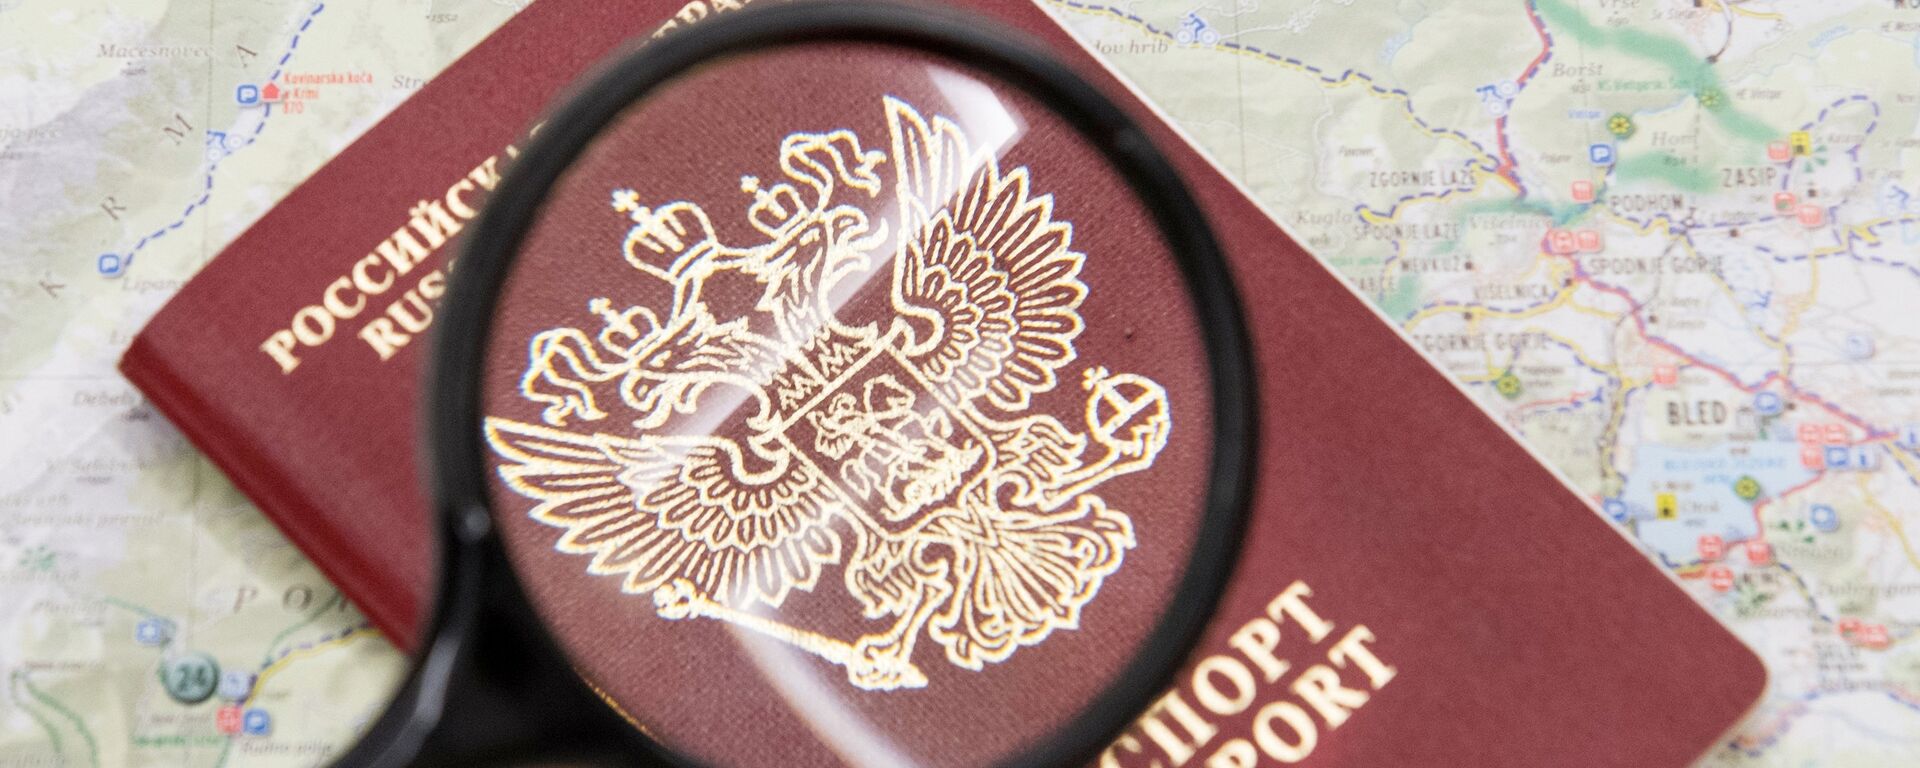 Un pasaporte ruso - Sputnik Mundo, 1920, 14.01.2020